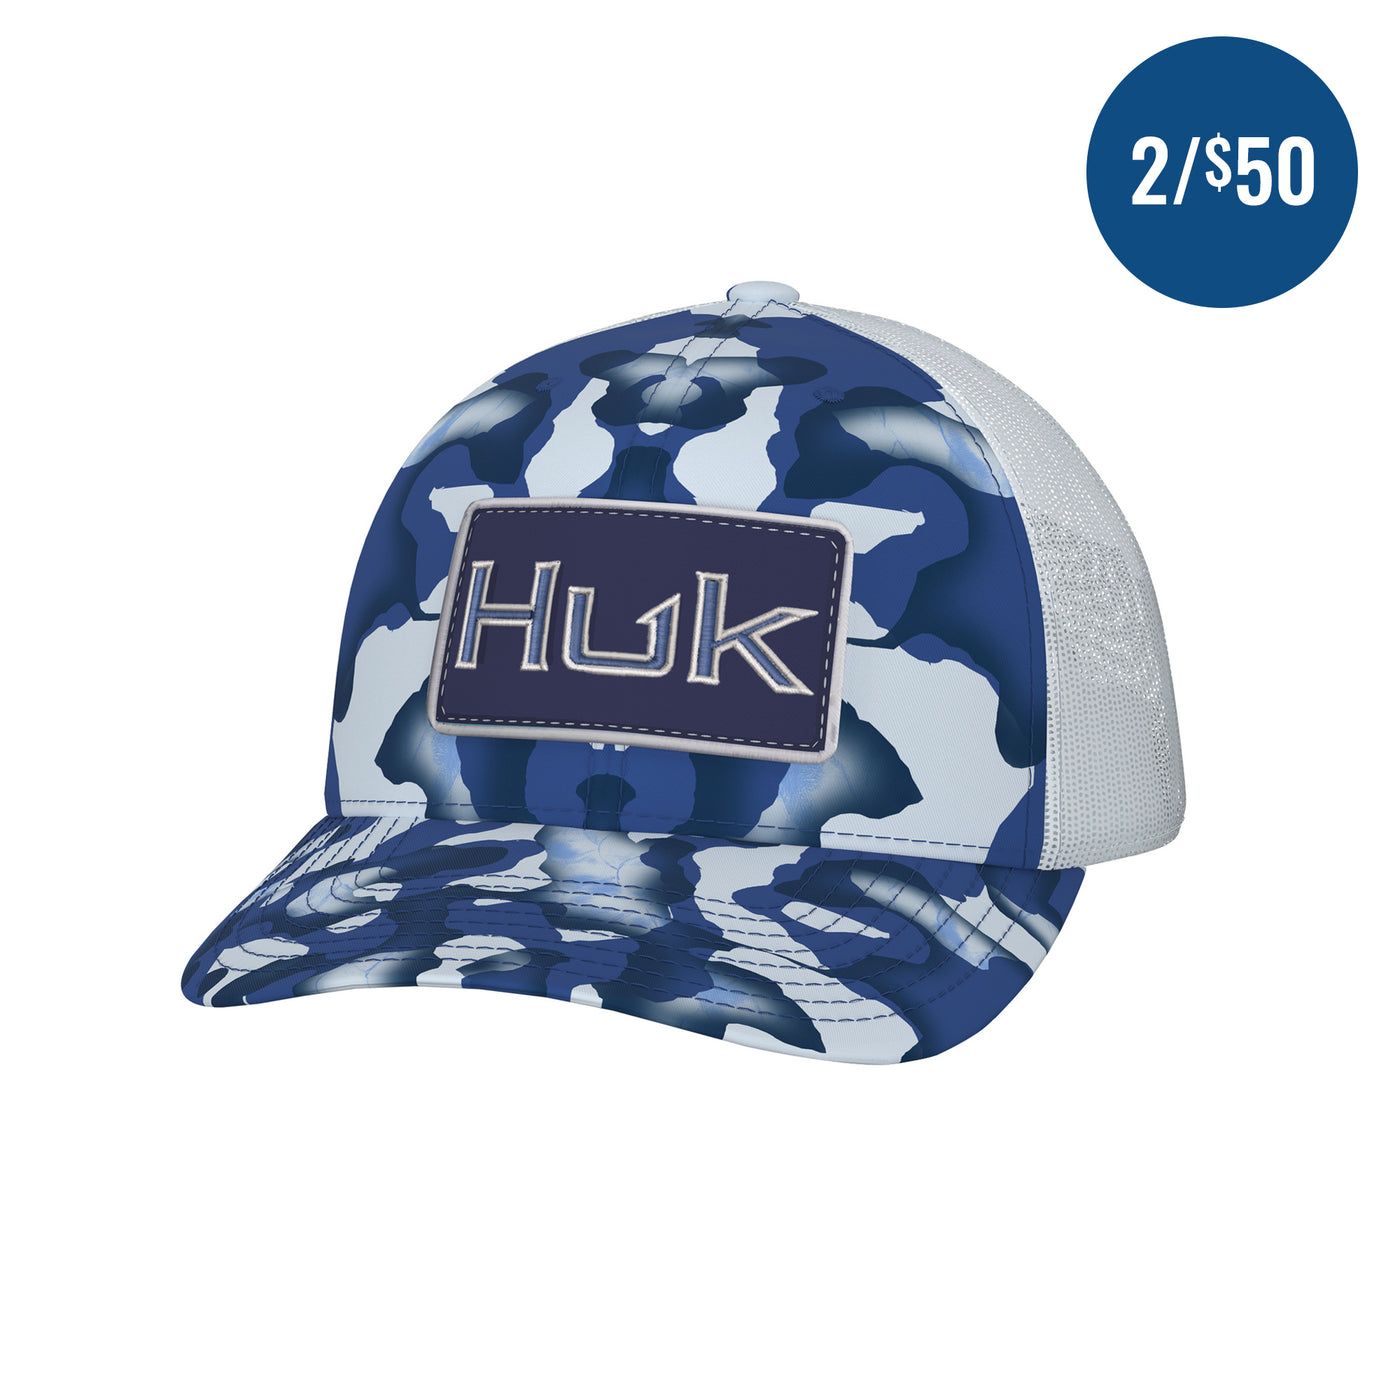 Huk KC Phantom Scales Trucker Hat